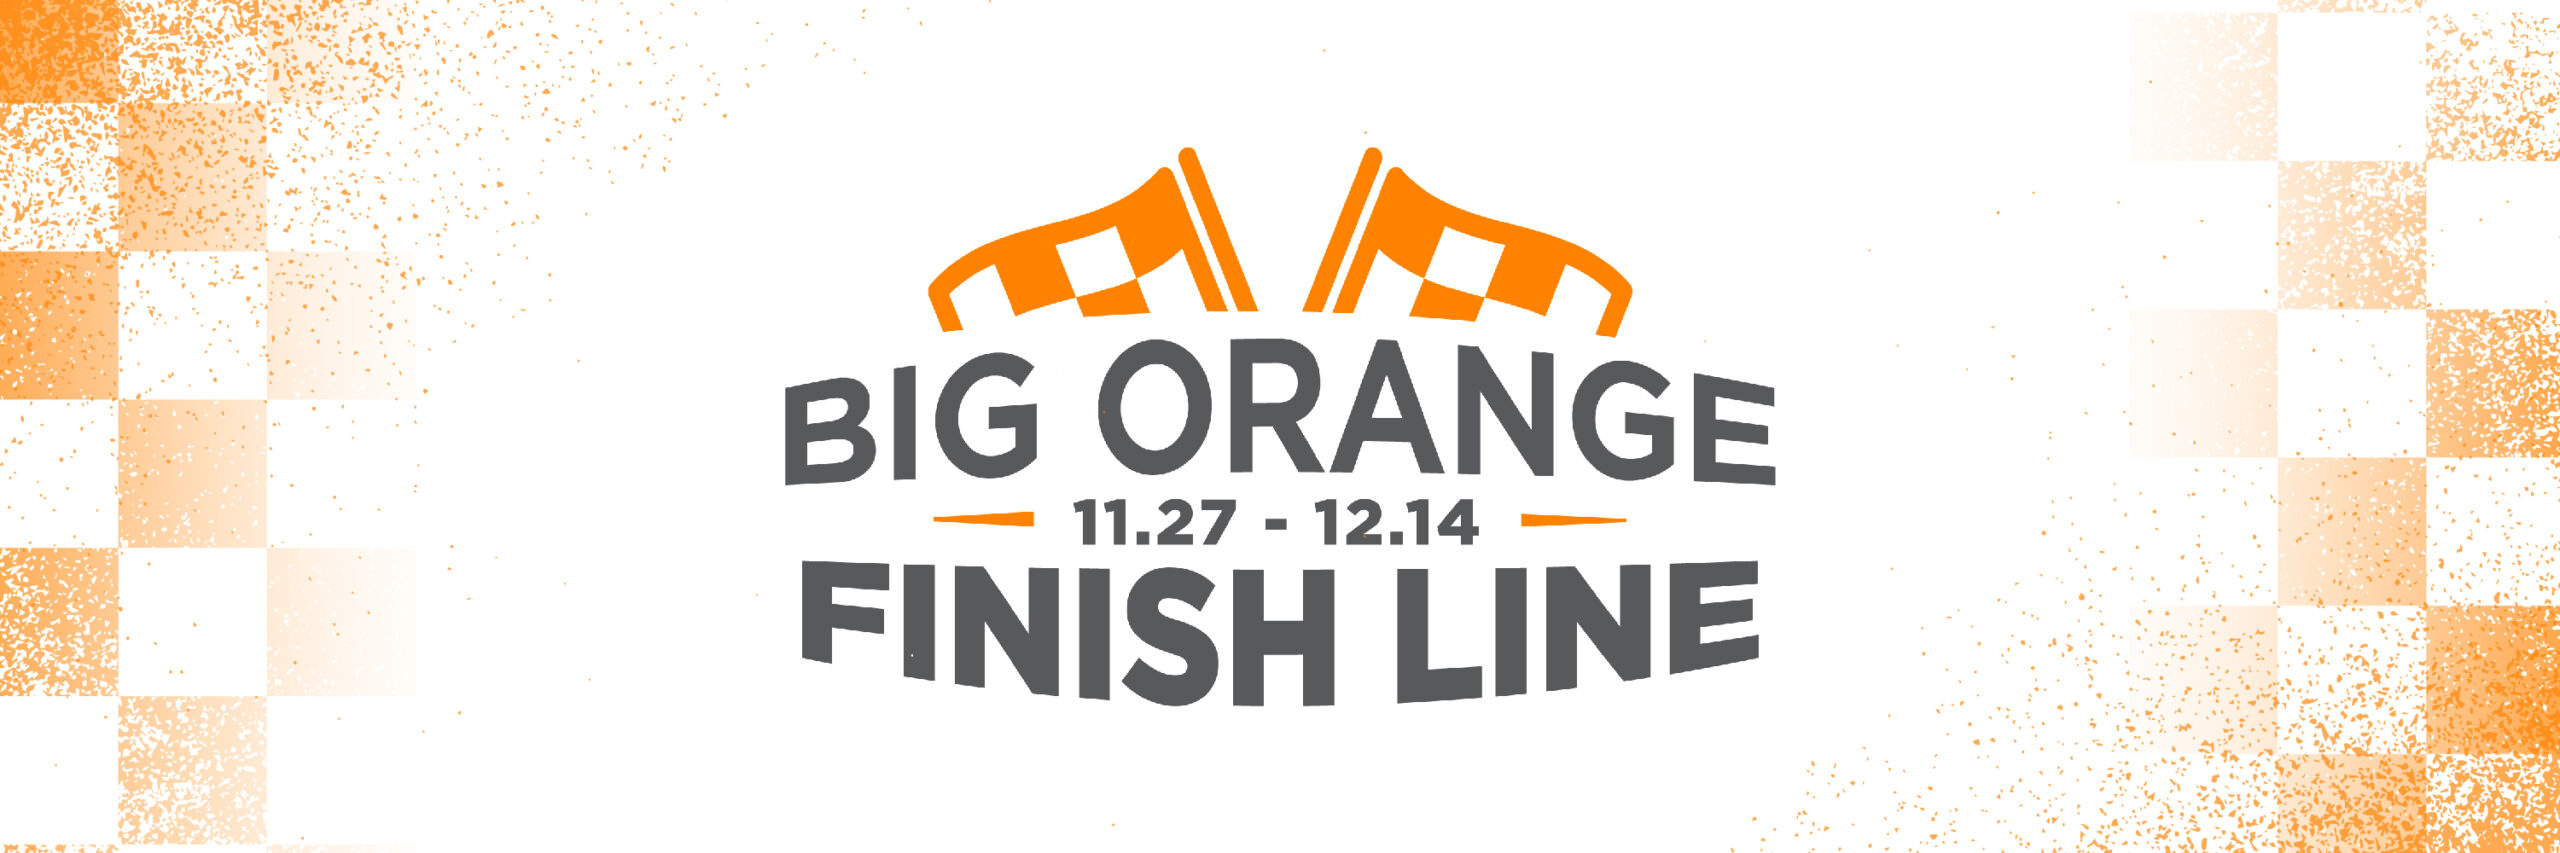 Big Orange Finish Line logo with the dates of 11.27 through 12.14